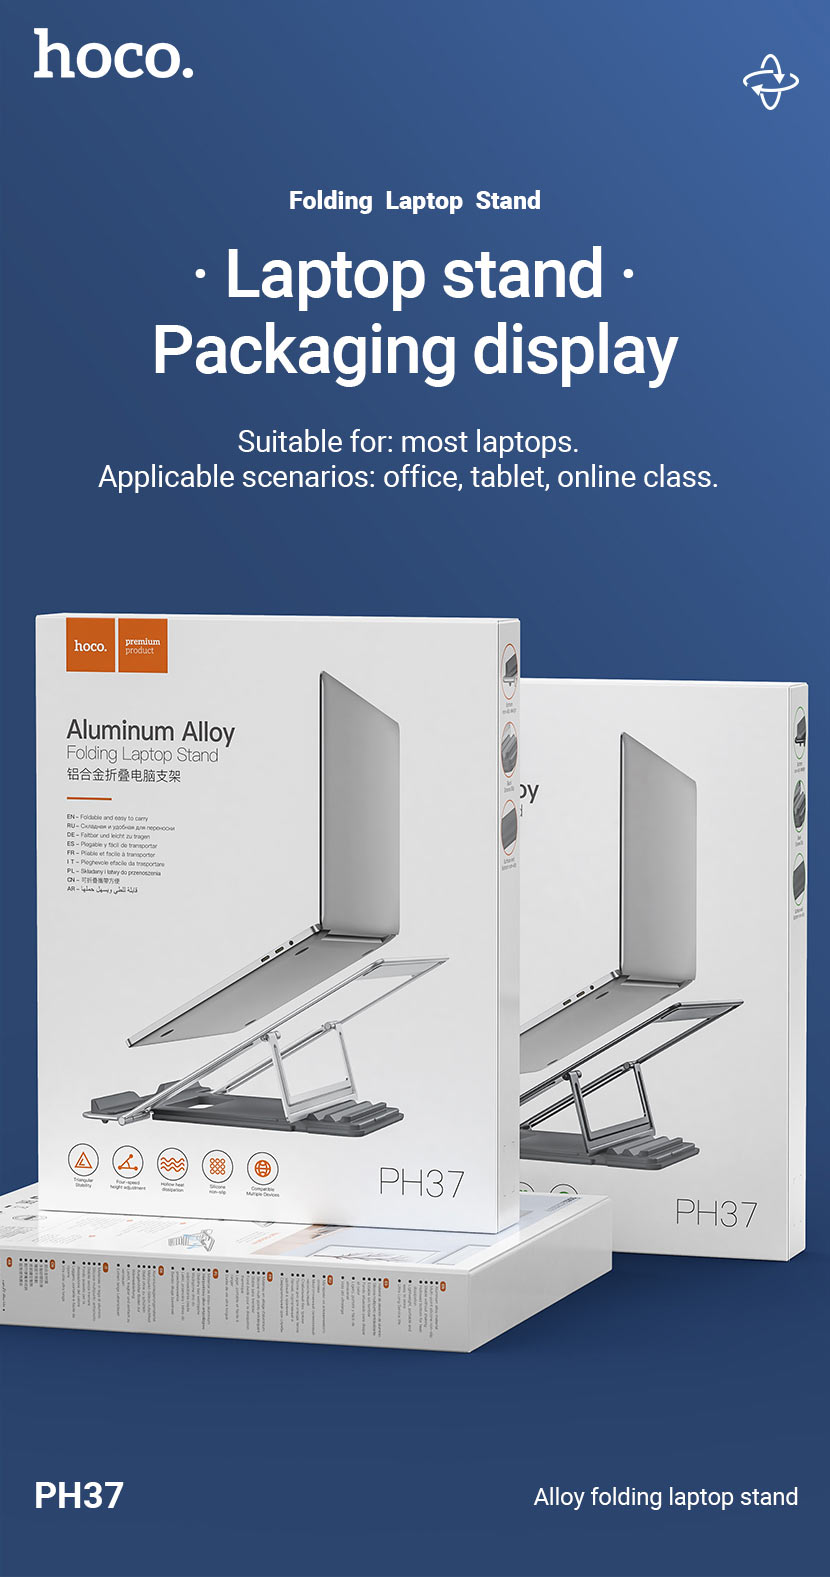 hoco news ph37 excellent aluminum alloy folding laptop stand package en